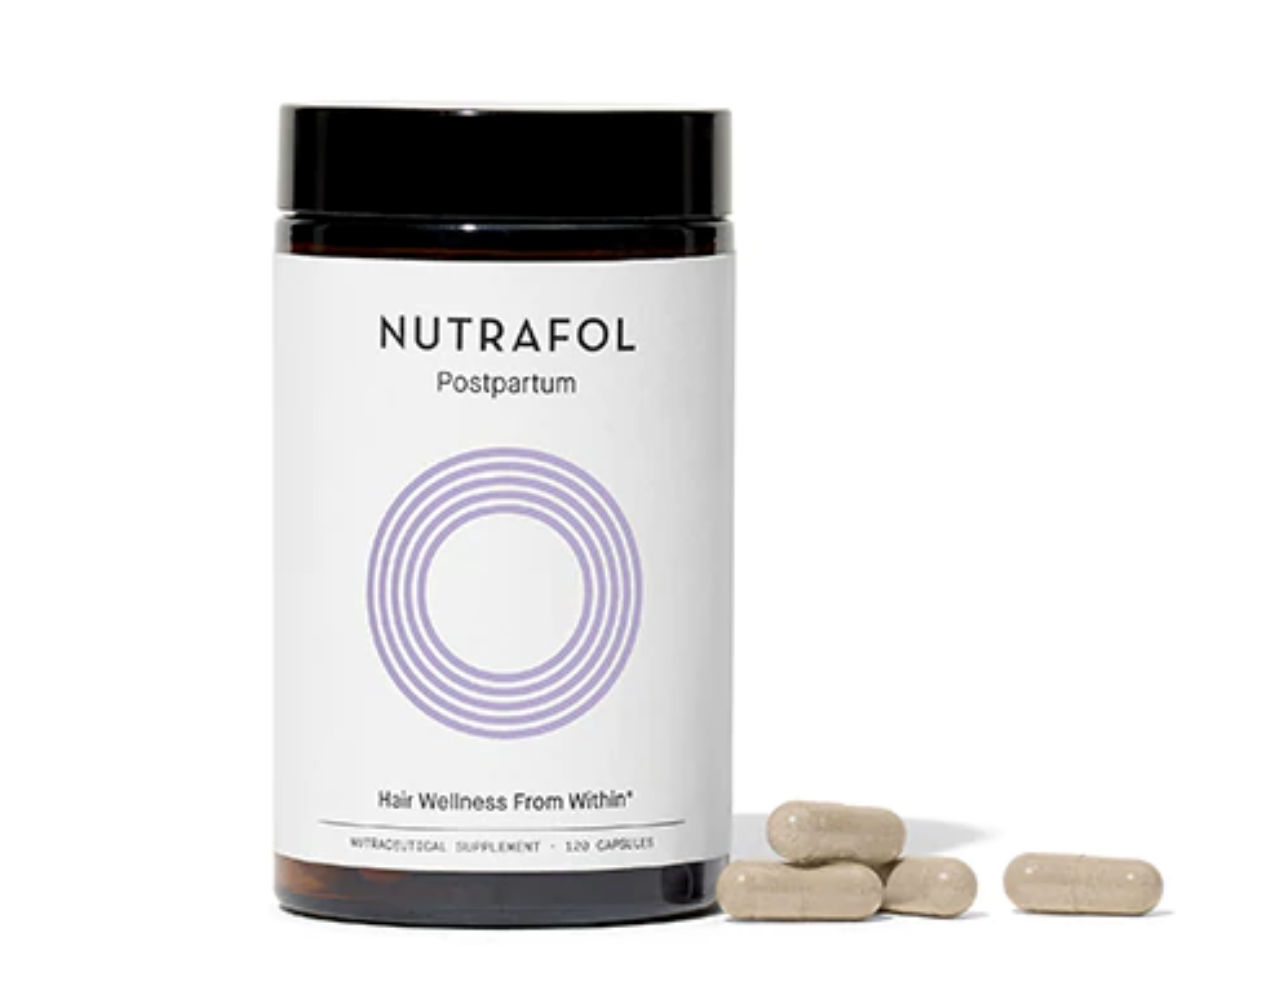 Nutrafol Postpartum, postpartum hair loss supplements